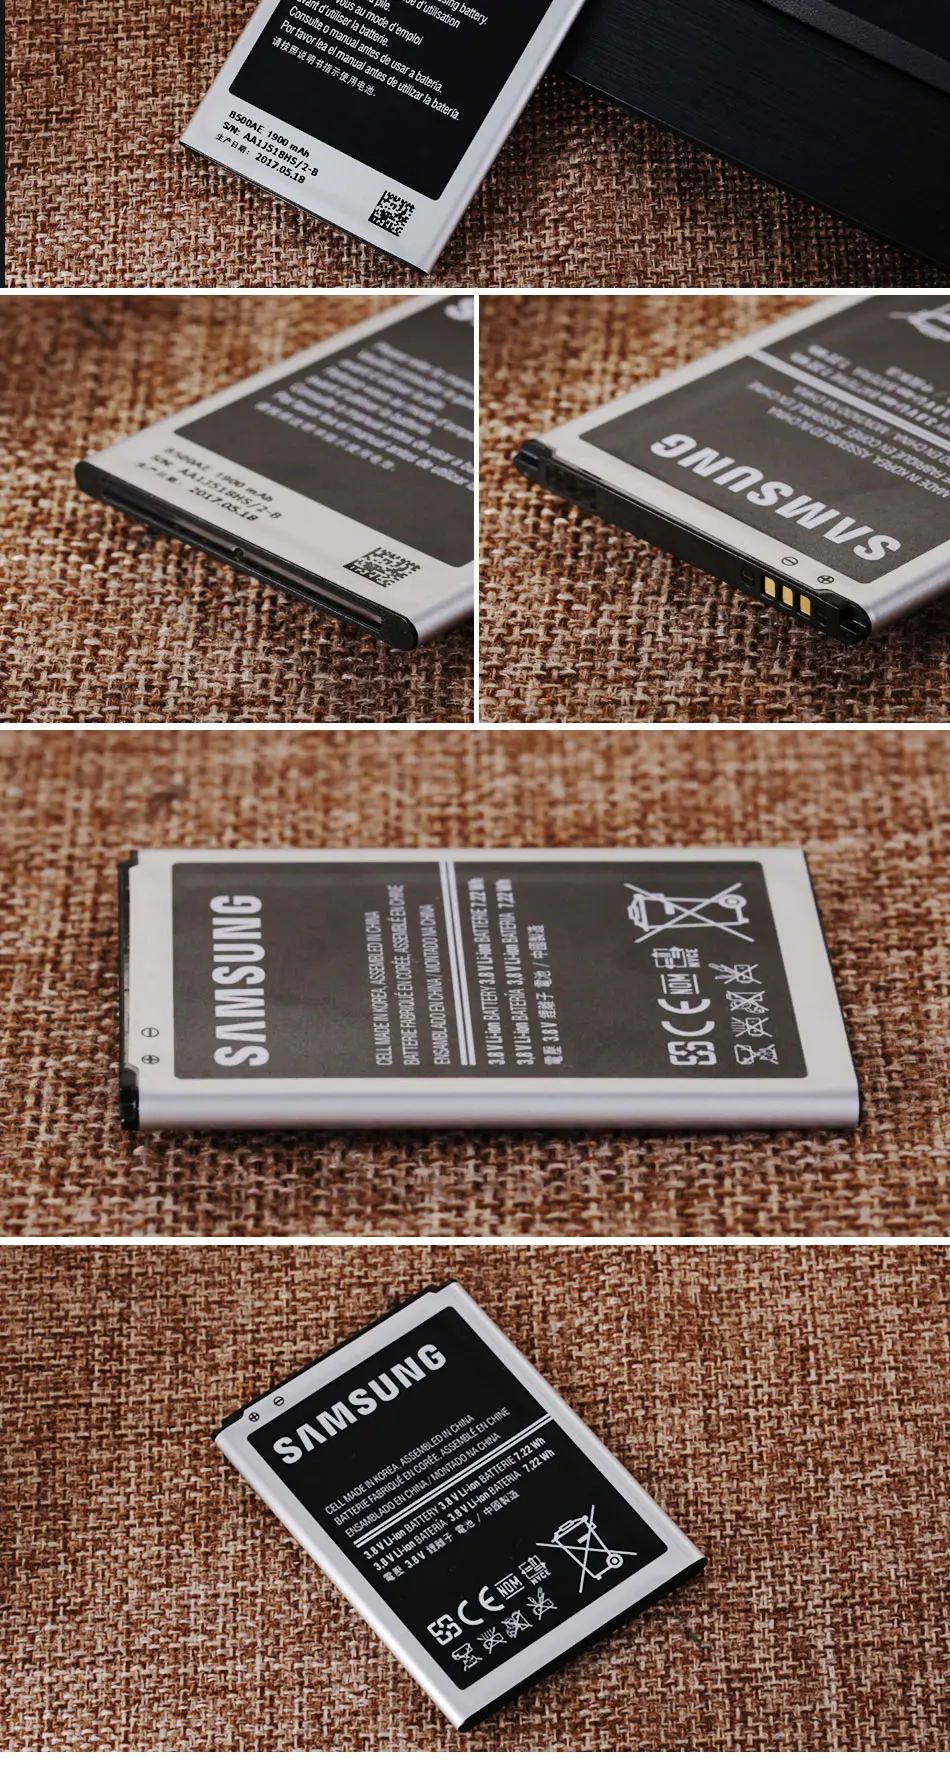 Аккумулятор для samsung Galaxy S4 mini i9192 I9190 I9198 1900mAh B500AE сменный аккумулятор без NFC